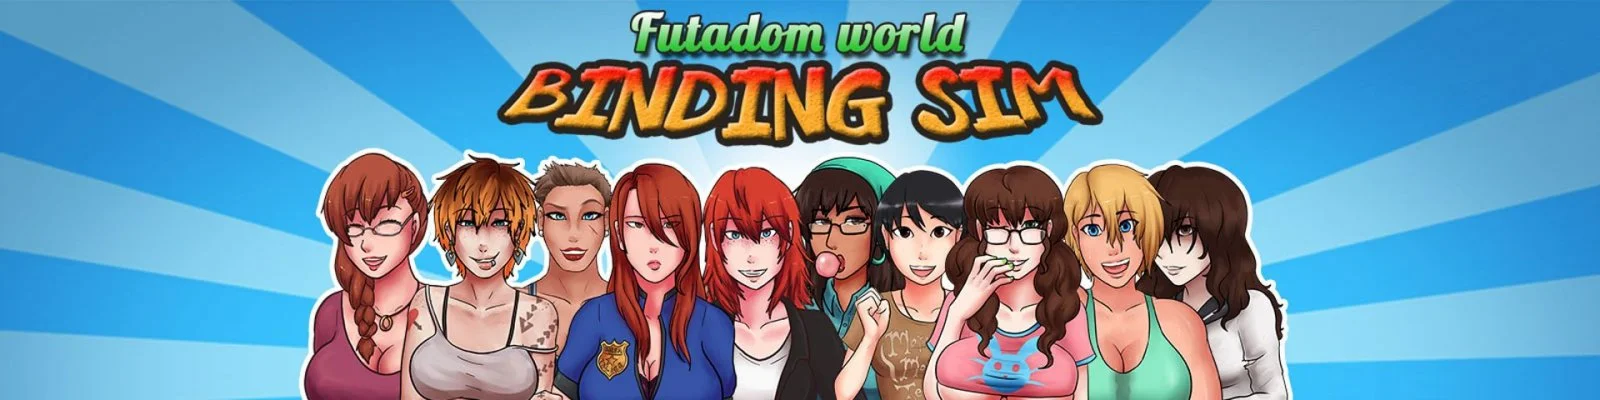 Futadom World - Binding Sim [v0.5a] main image